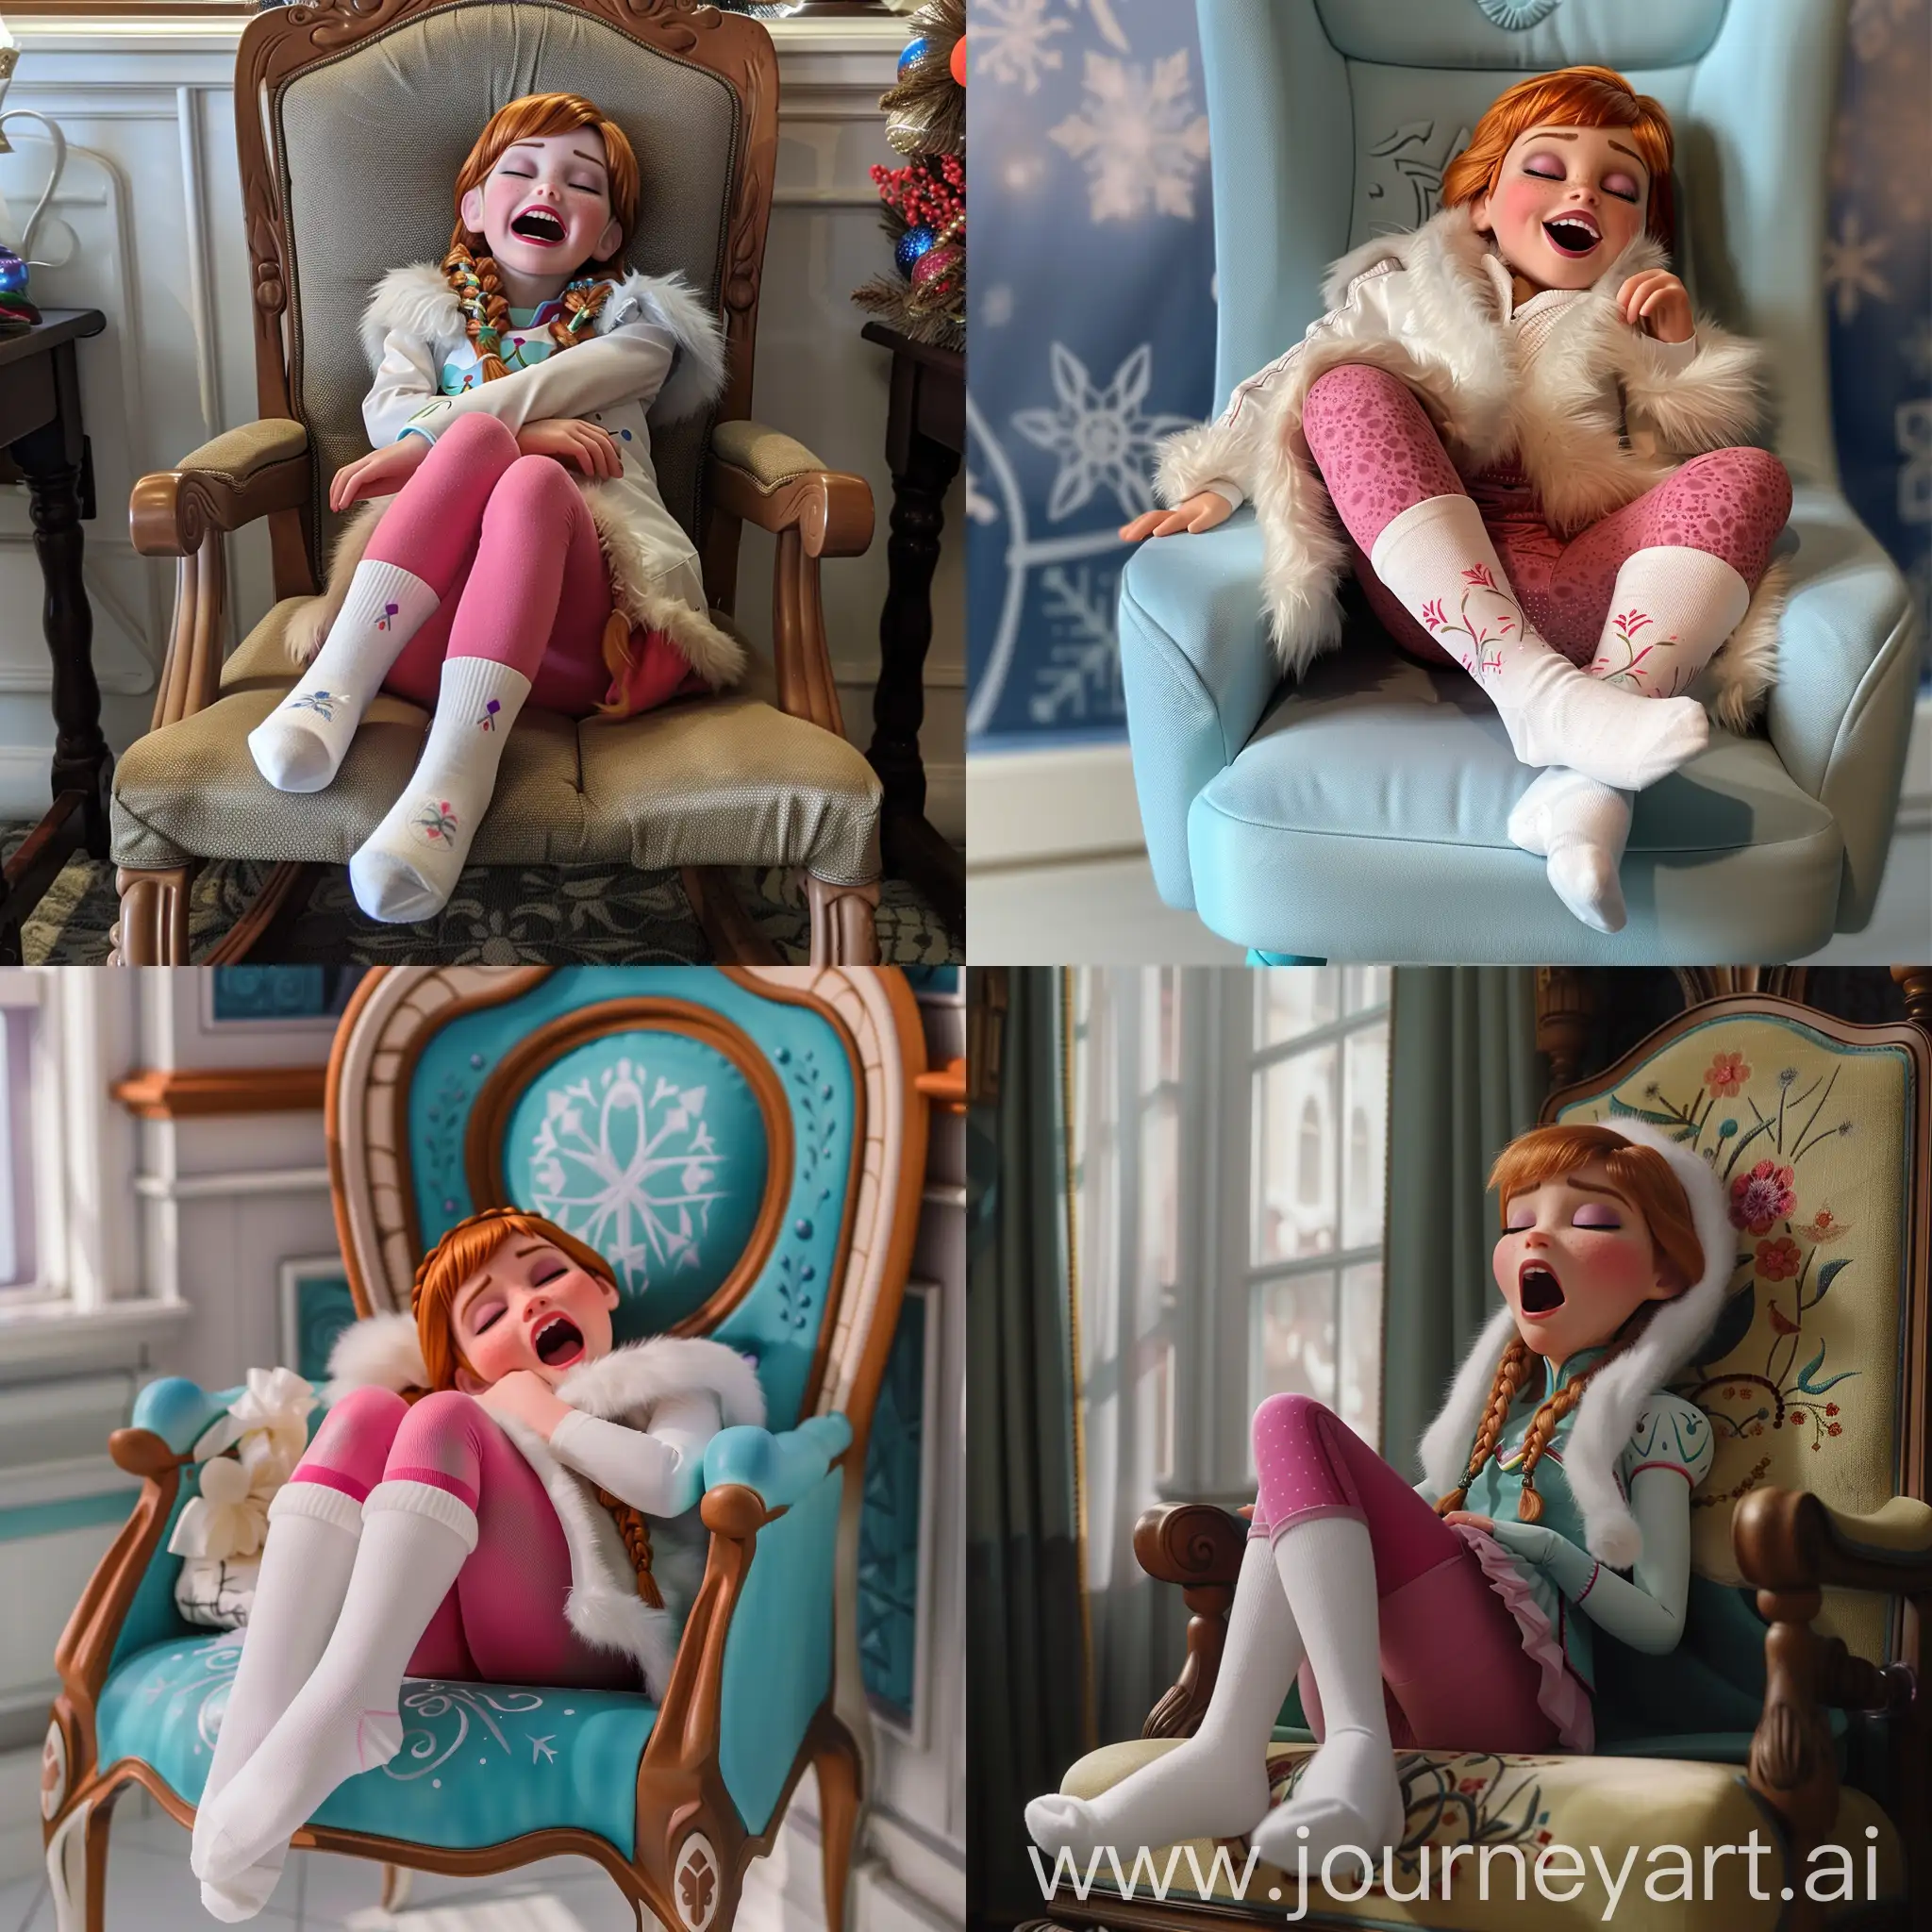 Sleeping-Anna-Wearing-White-Sock-and-Pink-Legging